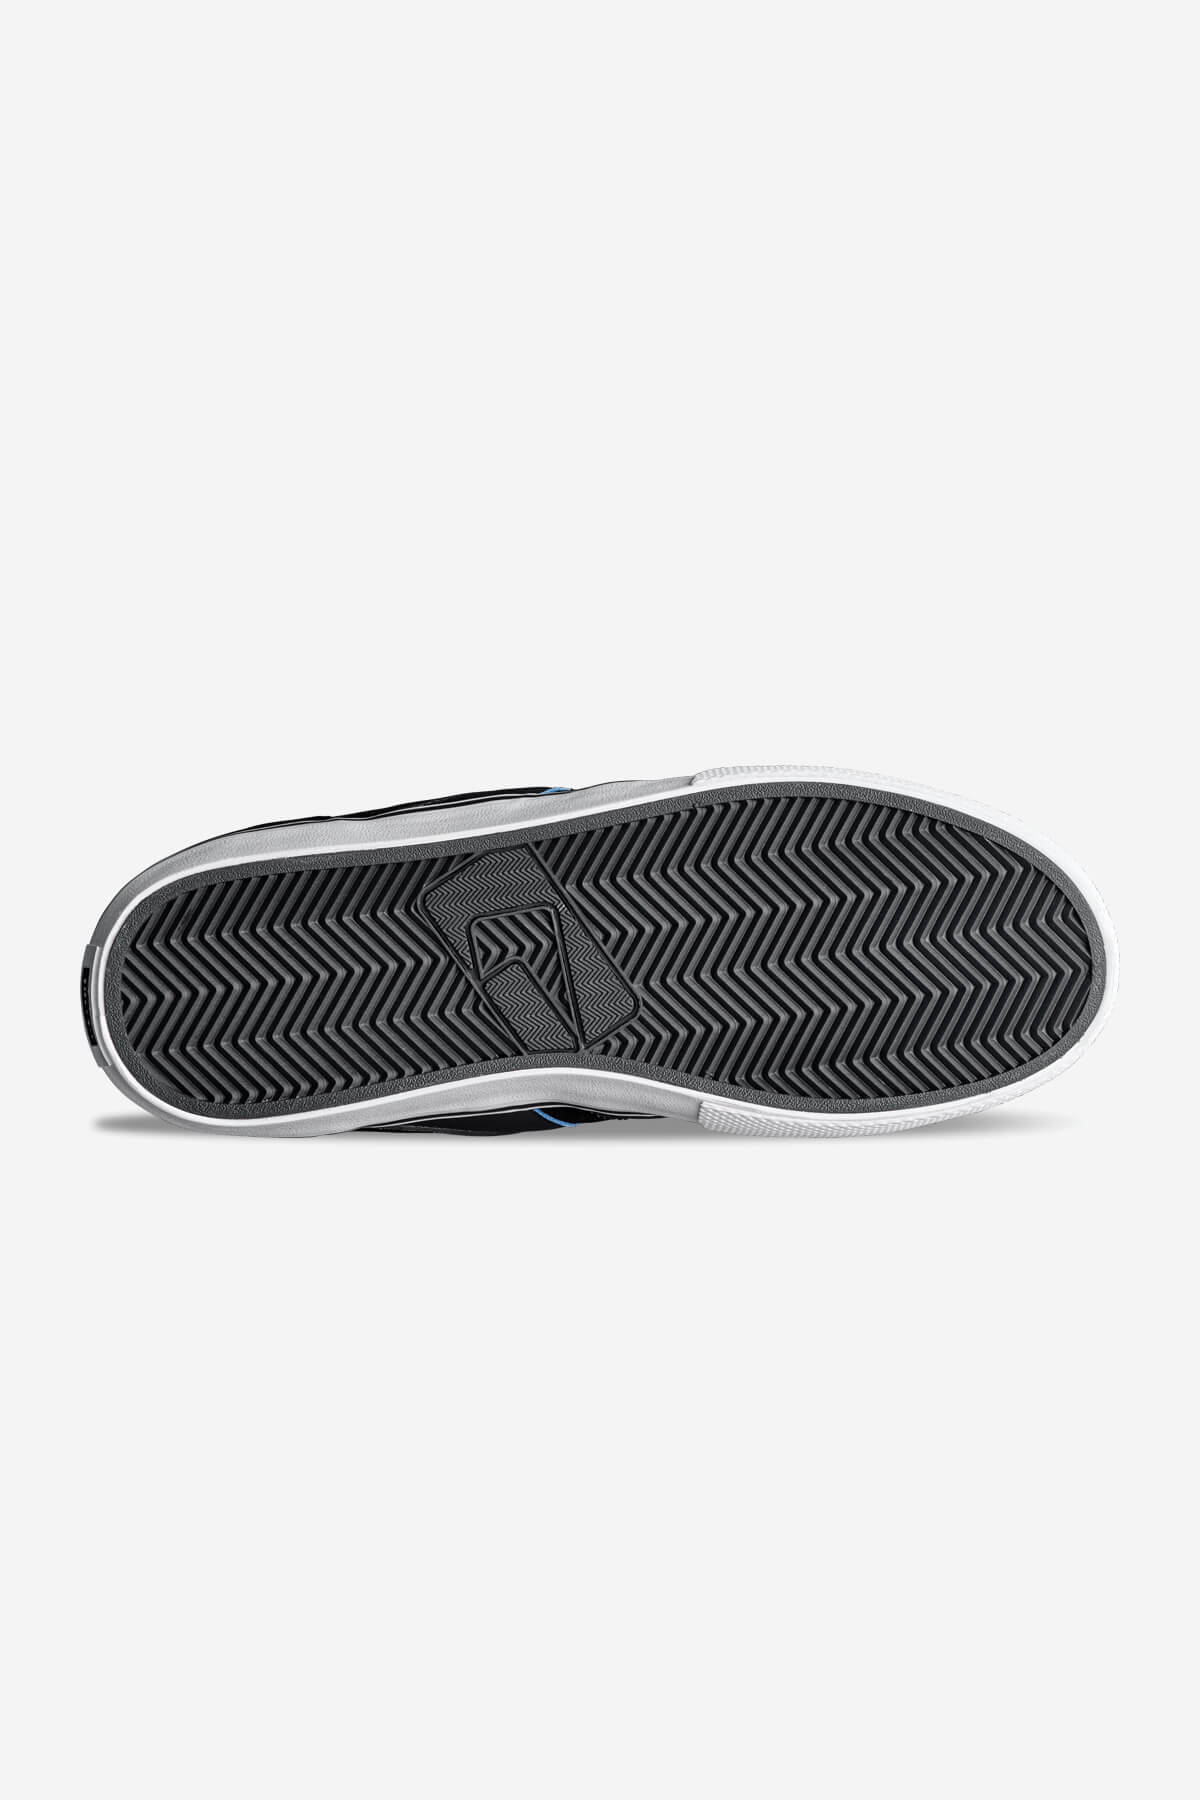 Globe - Encore 2 - Black/White/Cobalt - skateboard Zapatos